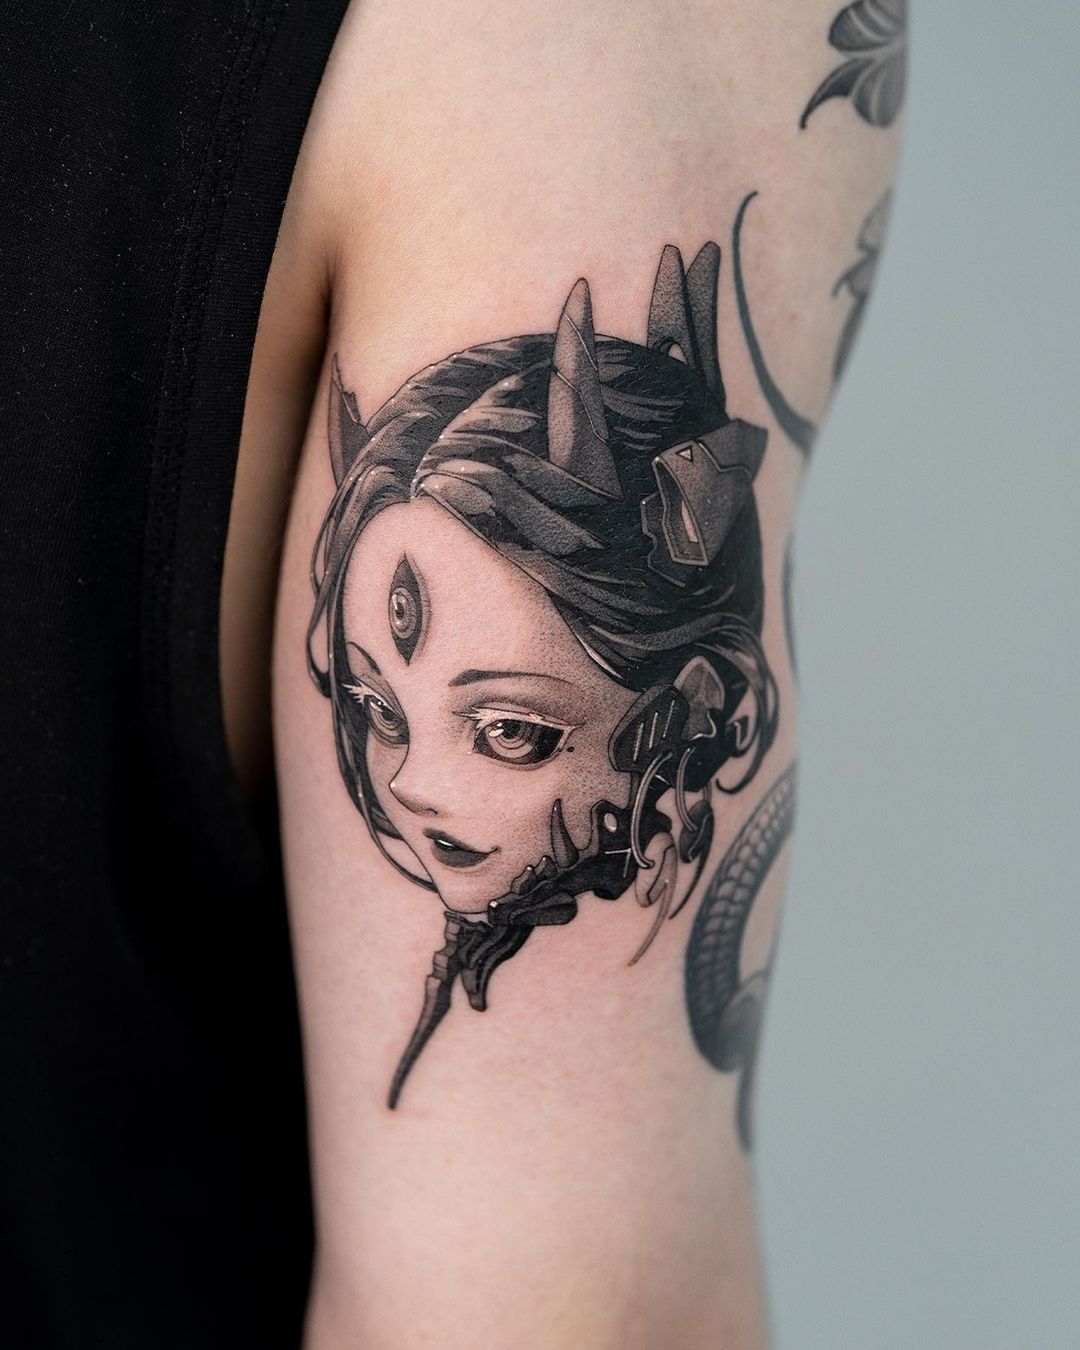 Stunning Female With Thirdeye Cyberpunk Tattoo